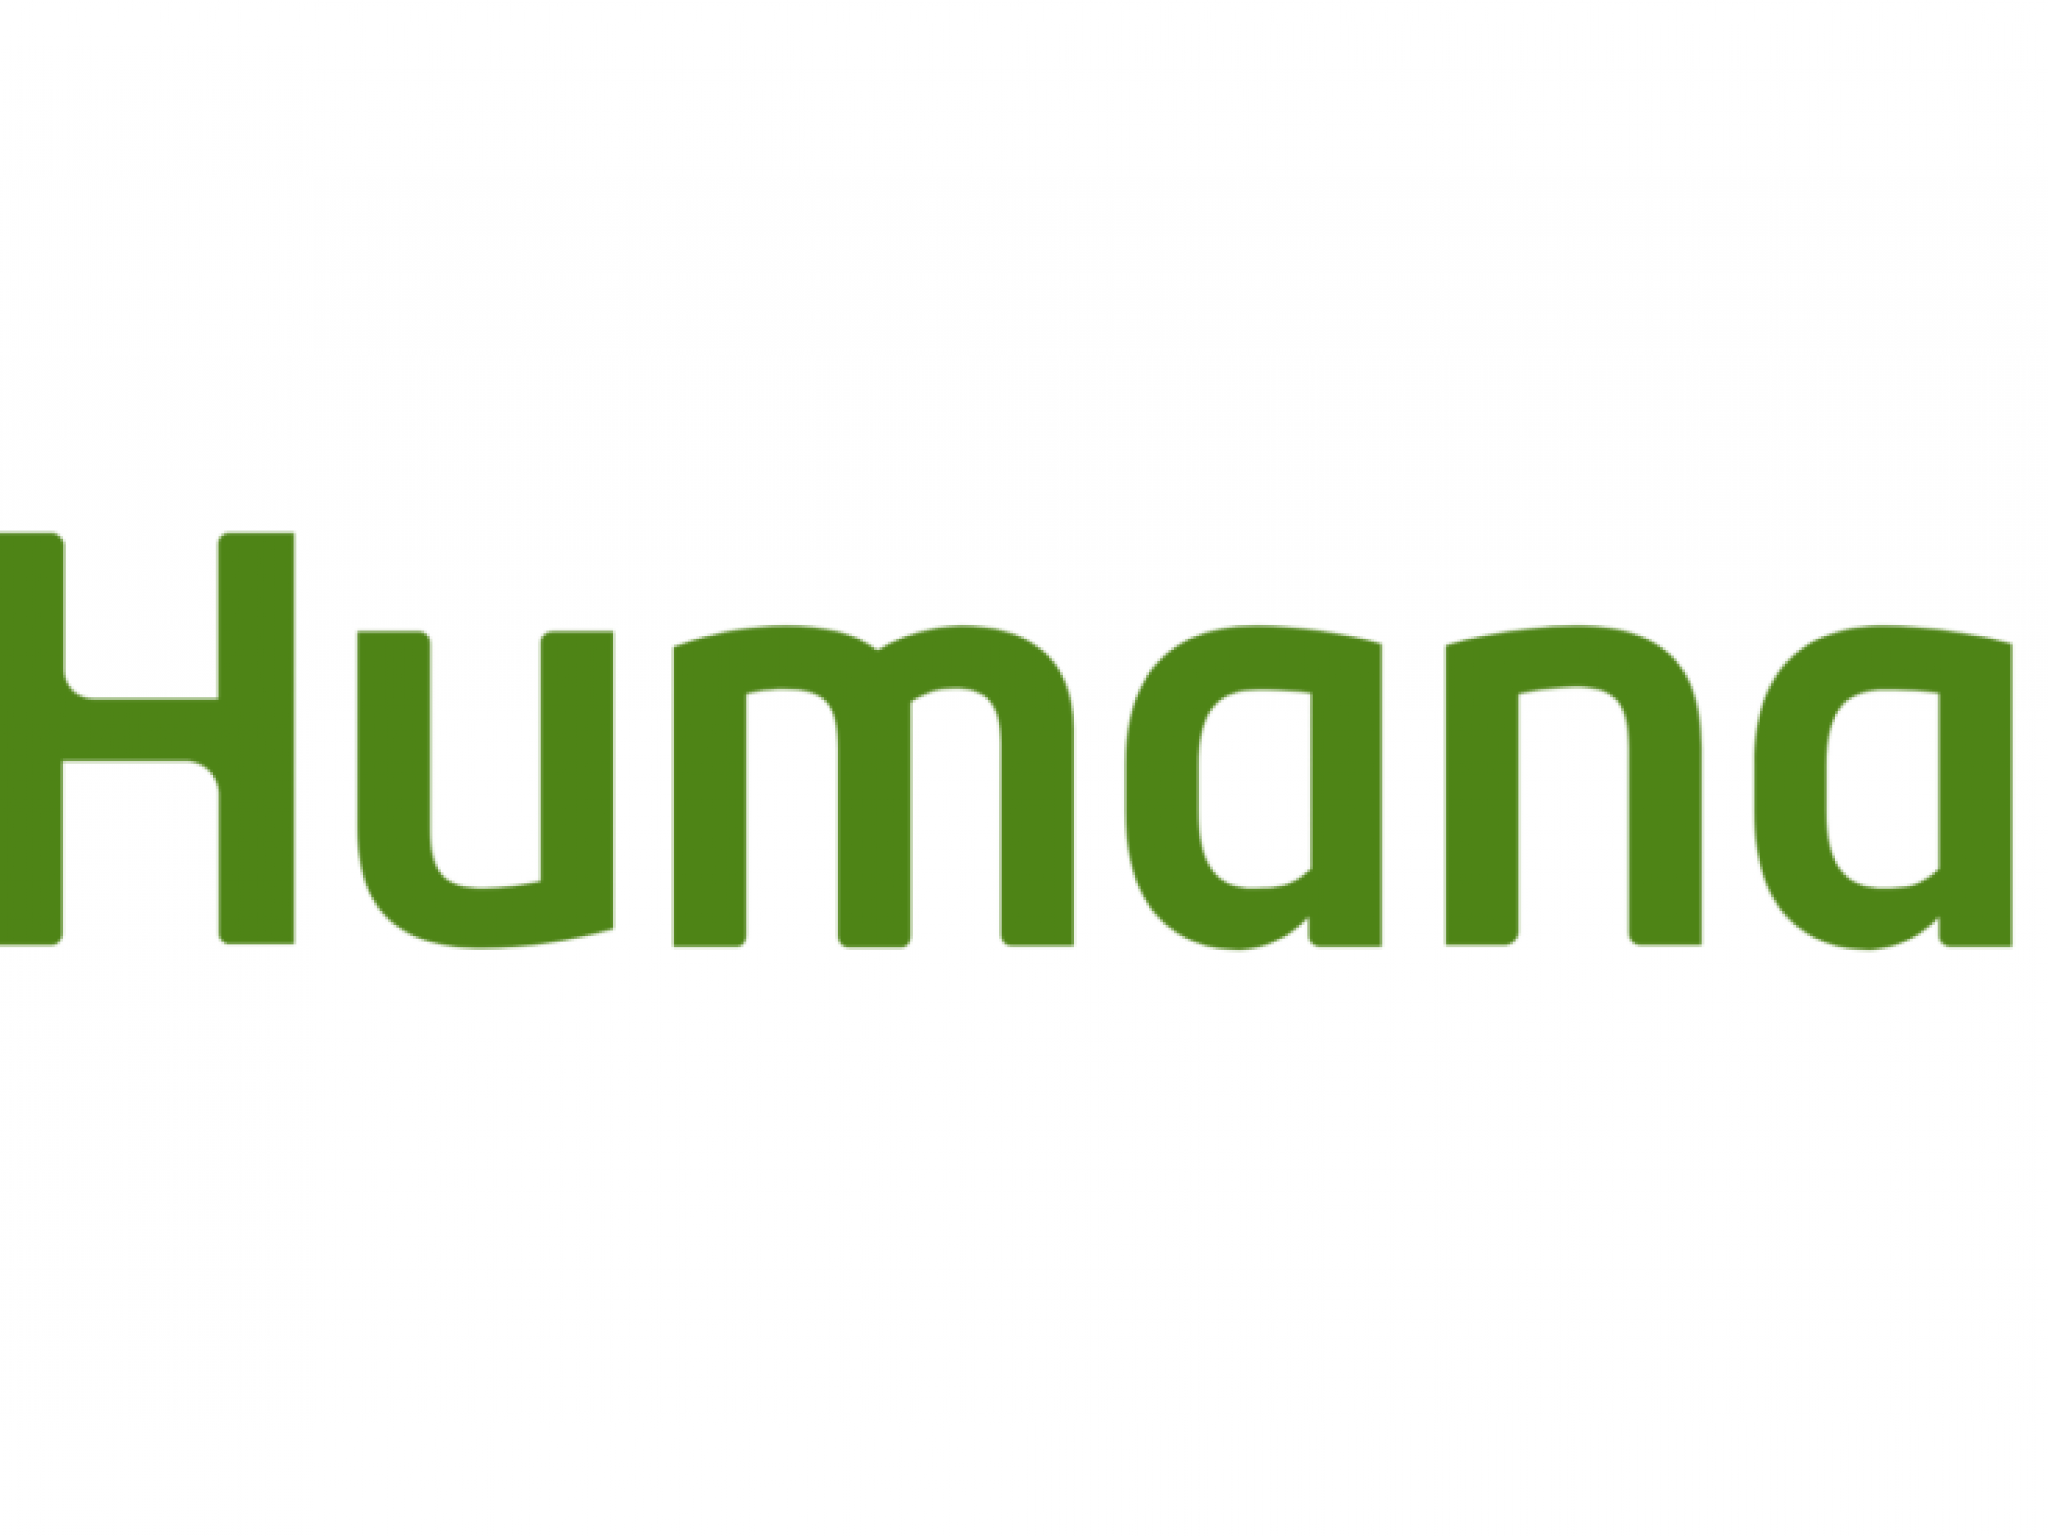  humana-withdraws-its-already-lowered-2025-profit-guidance 